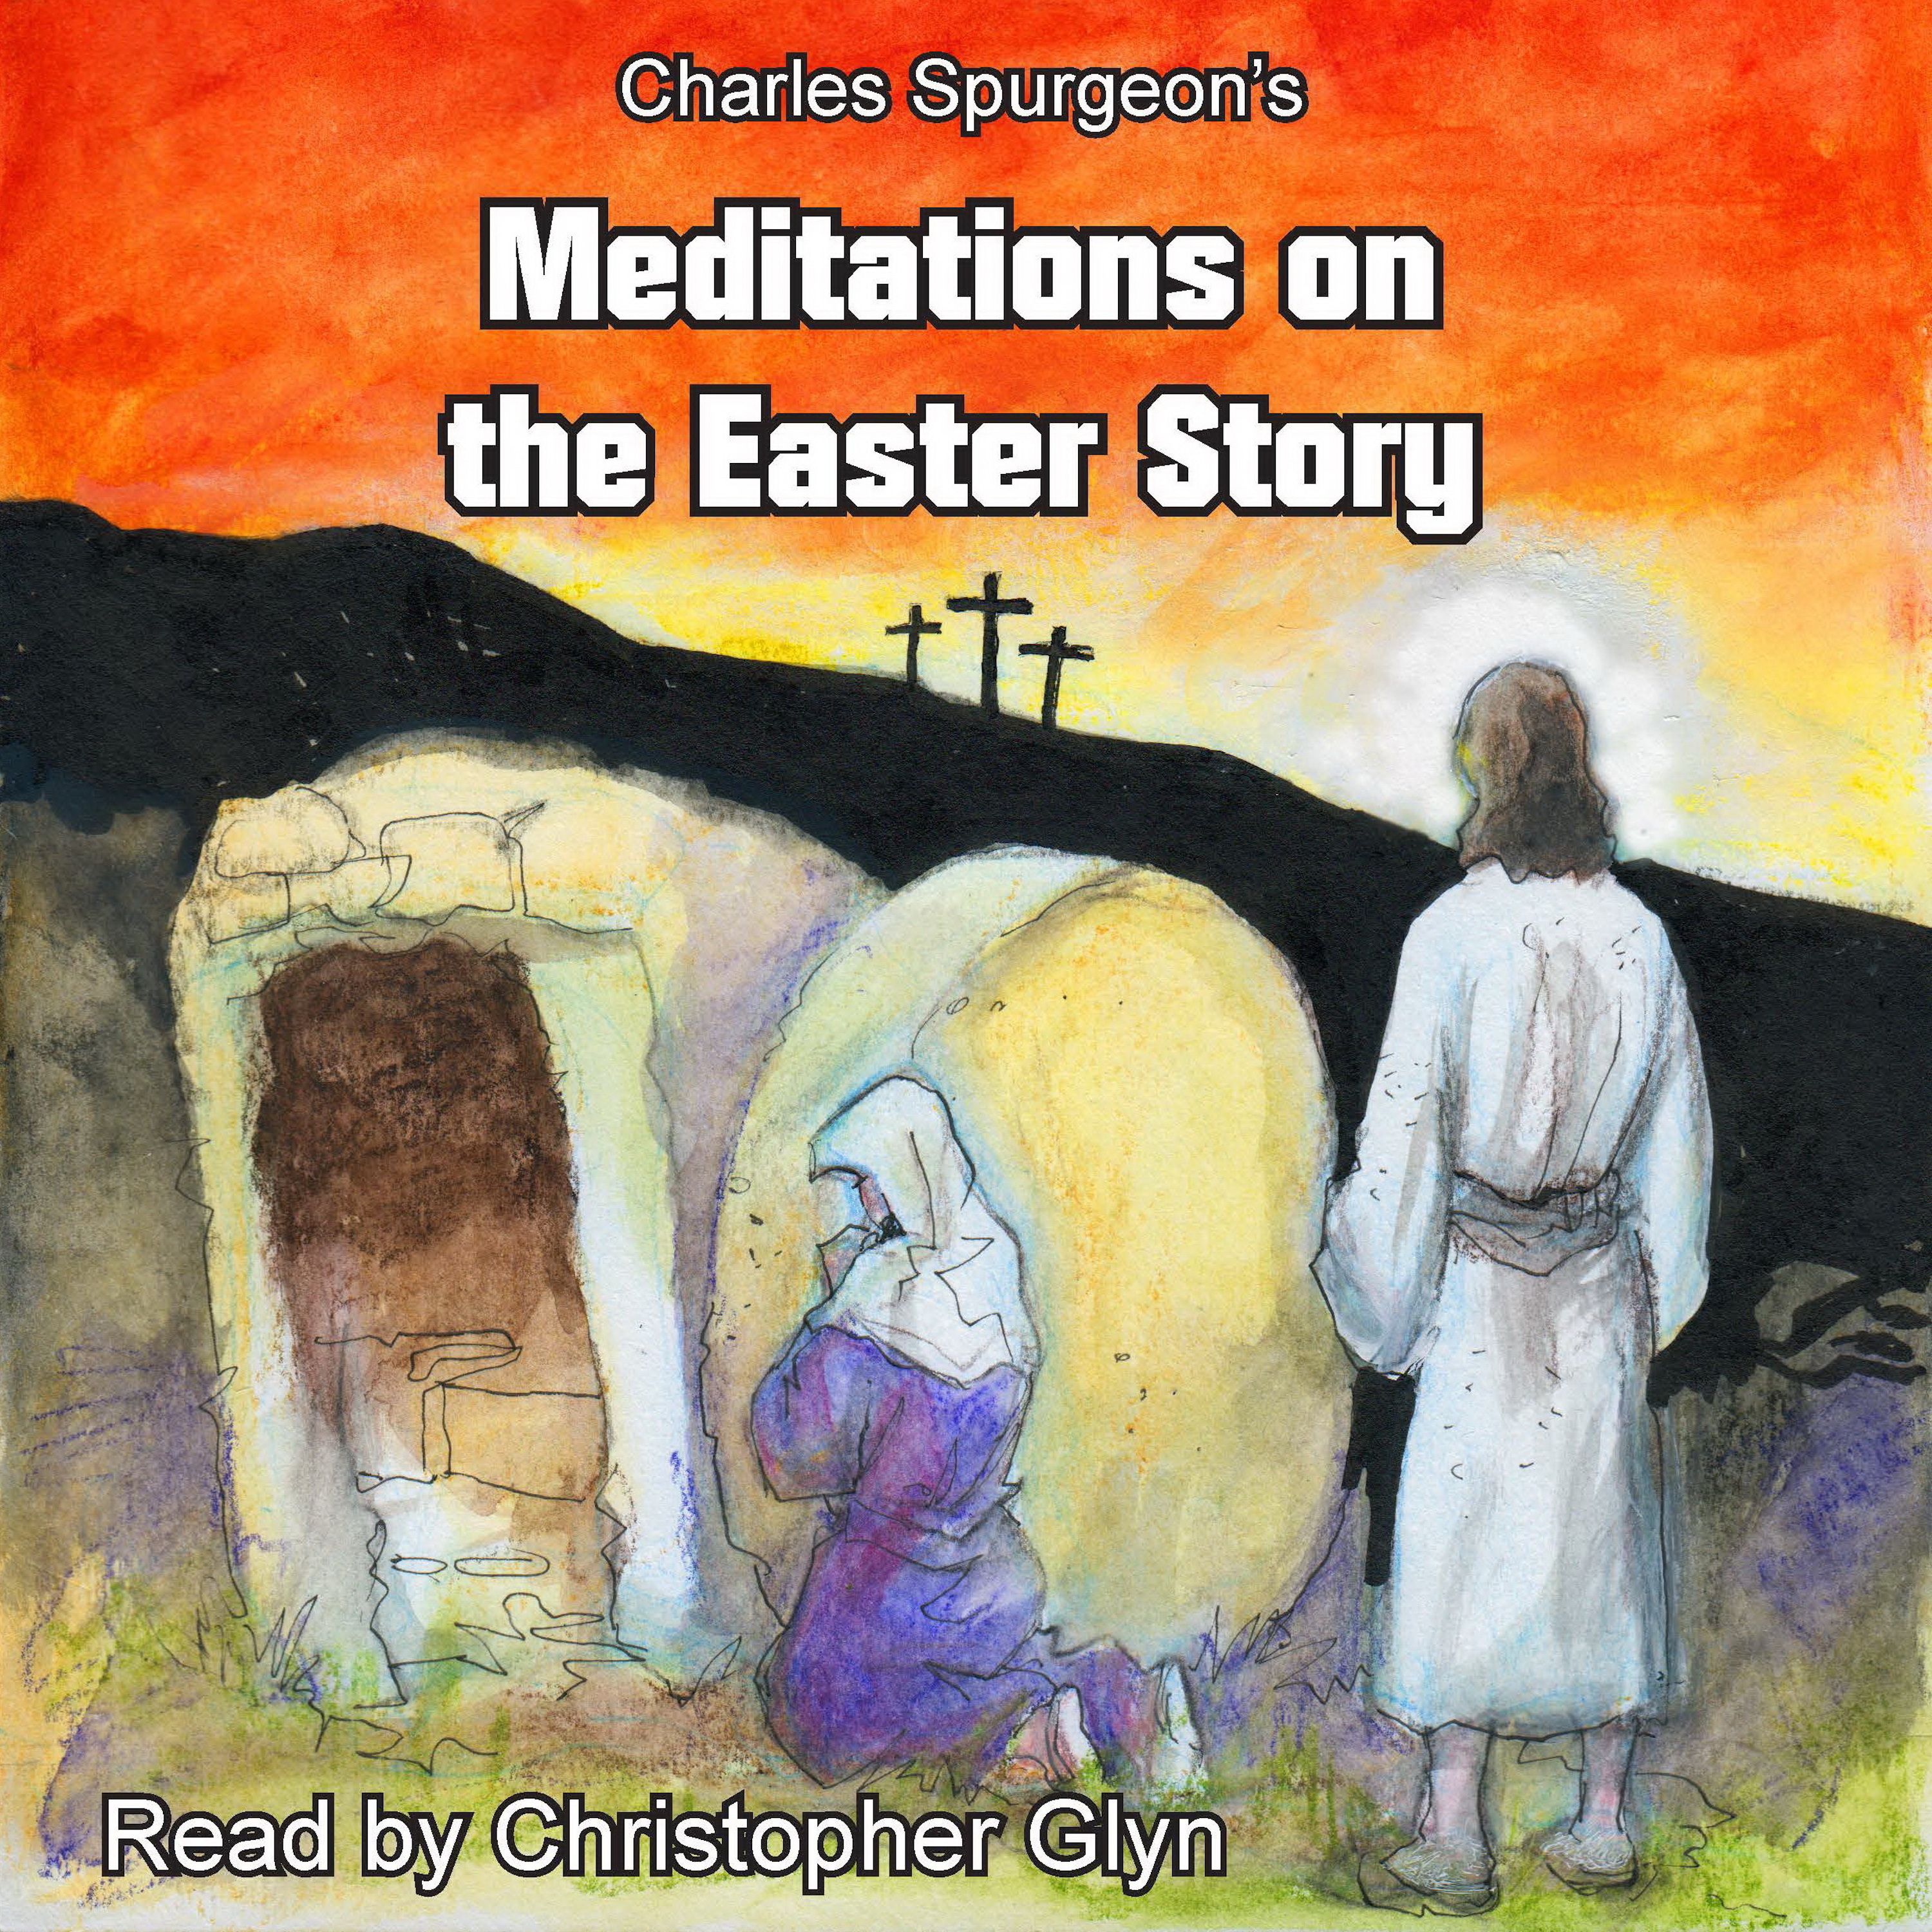 Charles Spurgeon's Meditations On The Easter Story, lydbog af Charles Spurgeon